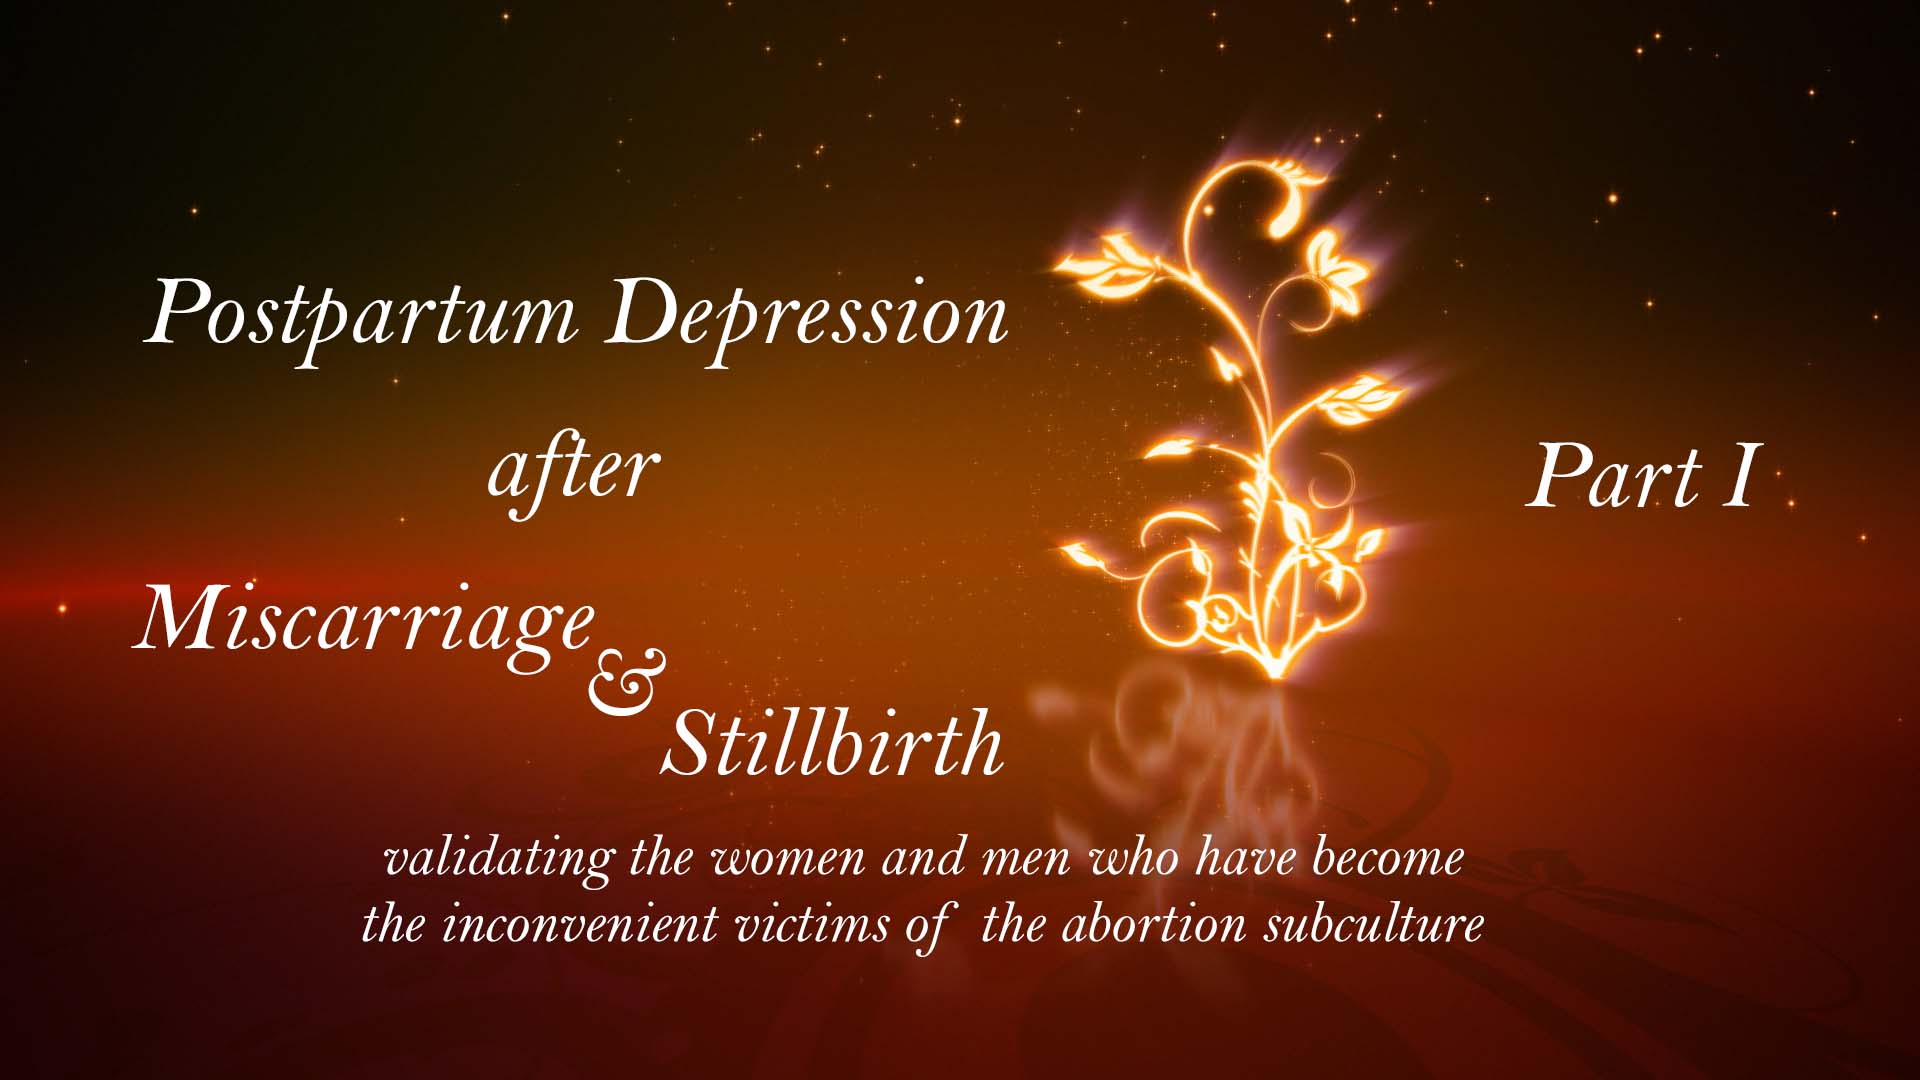 Postpartum Depression after Miscarriage and Stillbirth Pt 1: The Dream